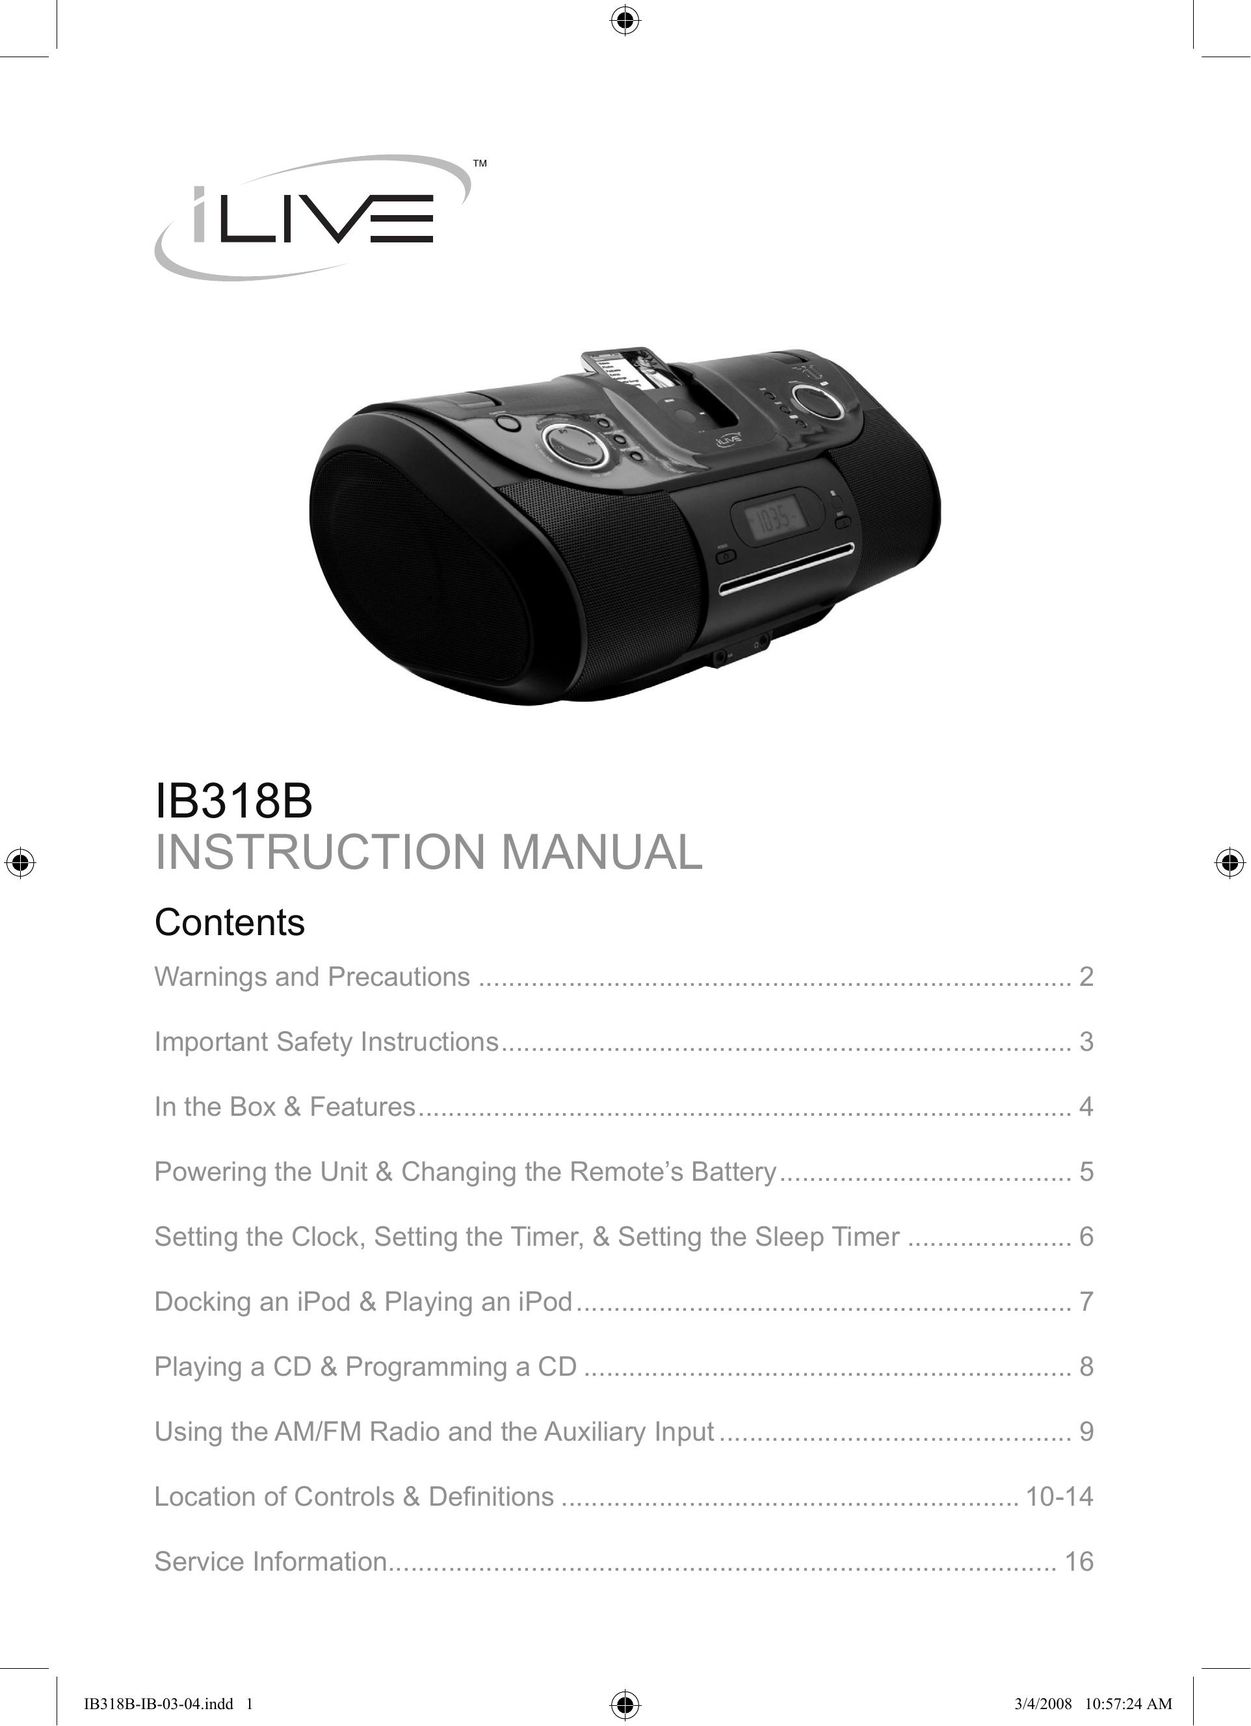 iLive IB318B MP3 Docking Station User Manual